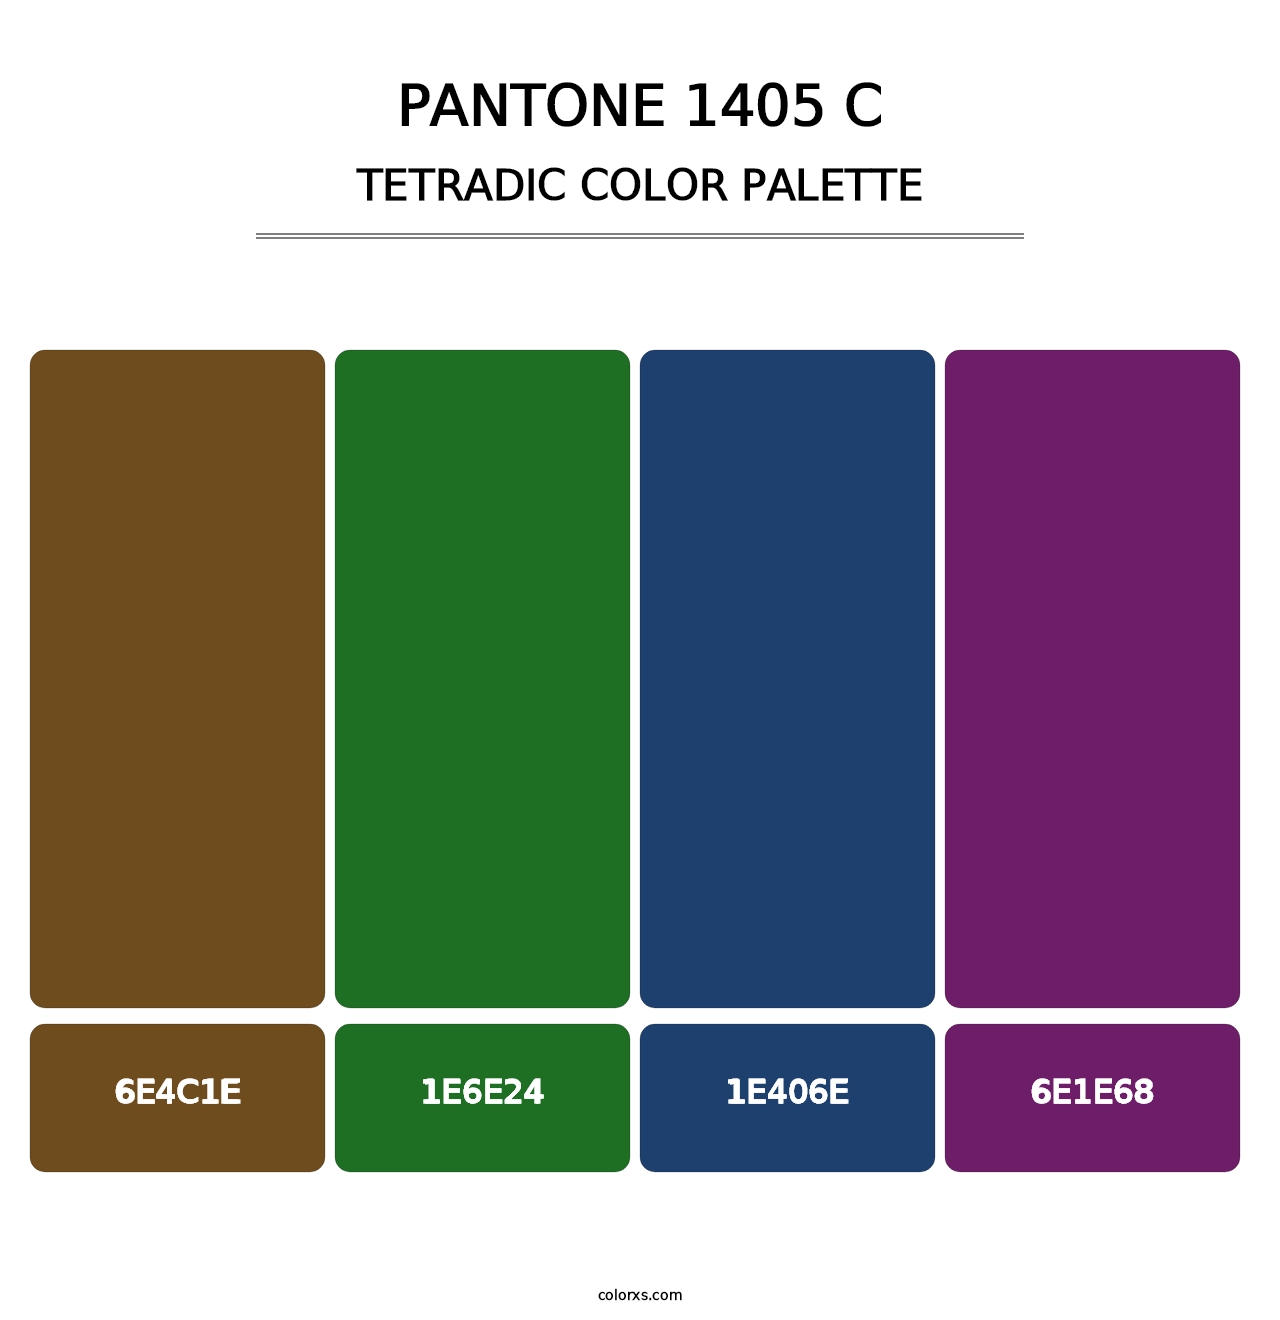 PANTONE 1405 C - Tetradic Color Palette